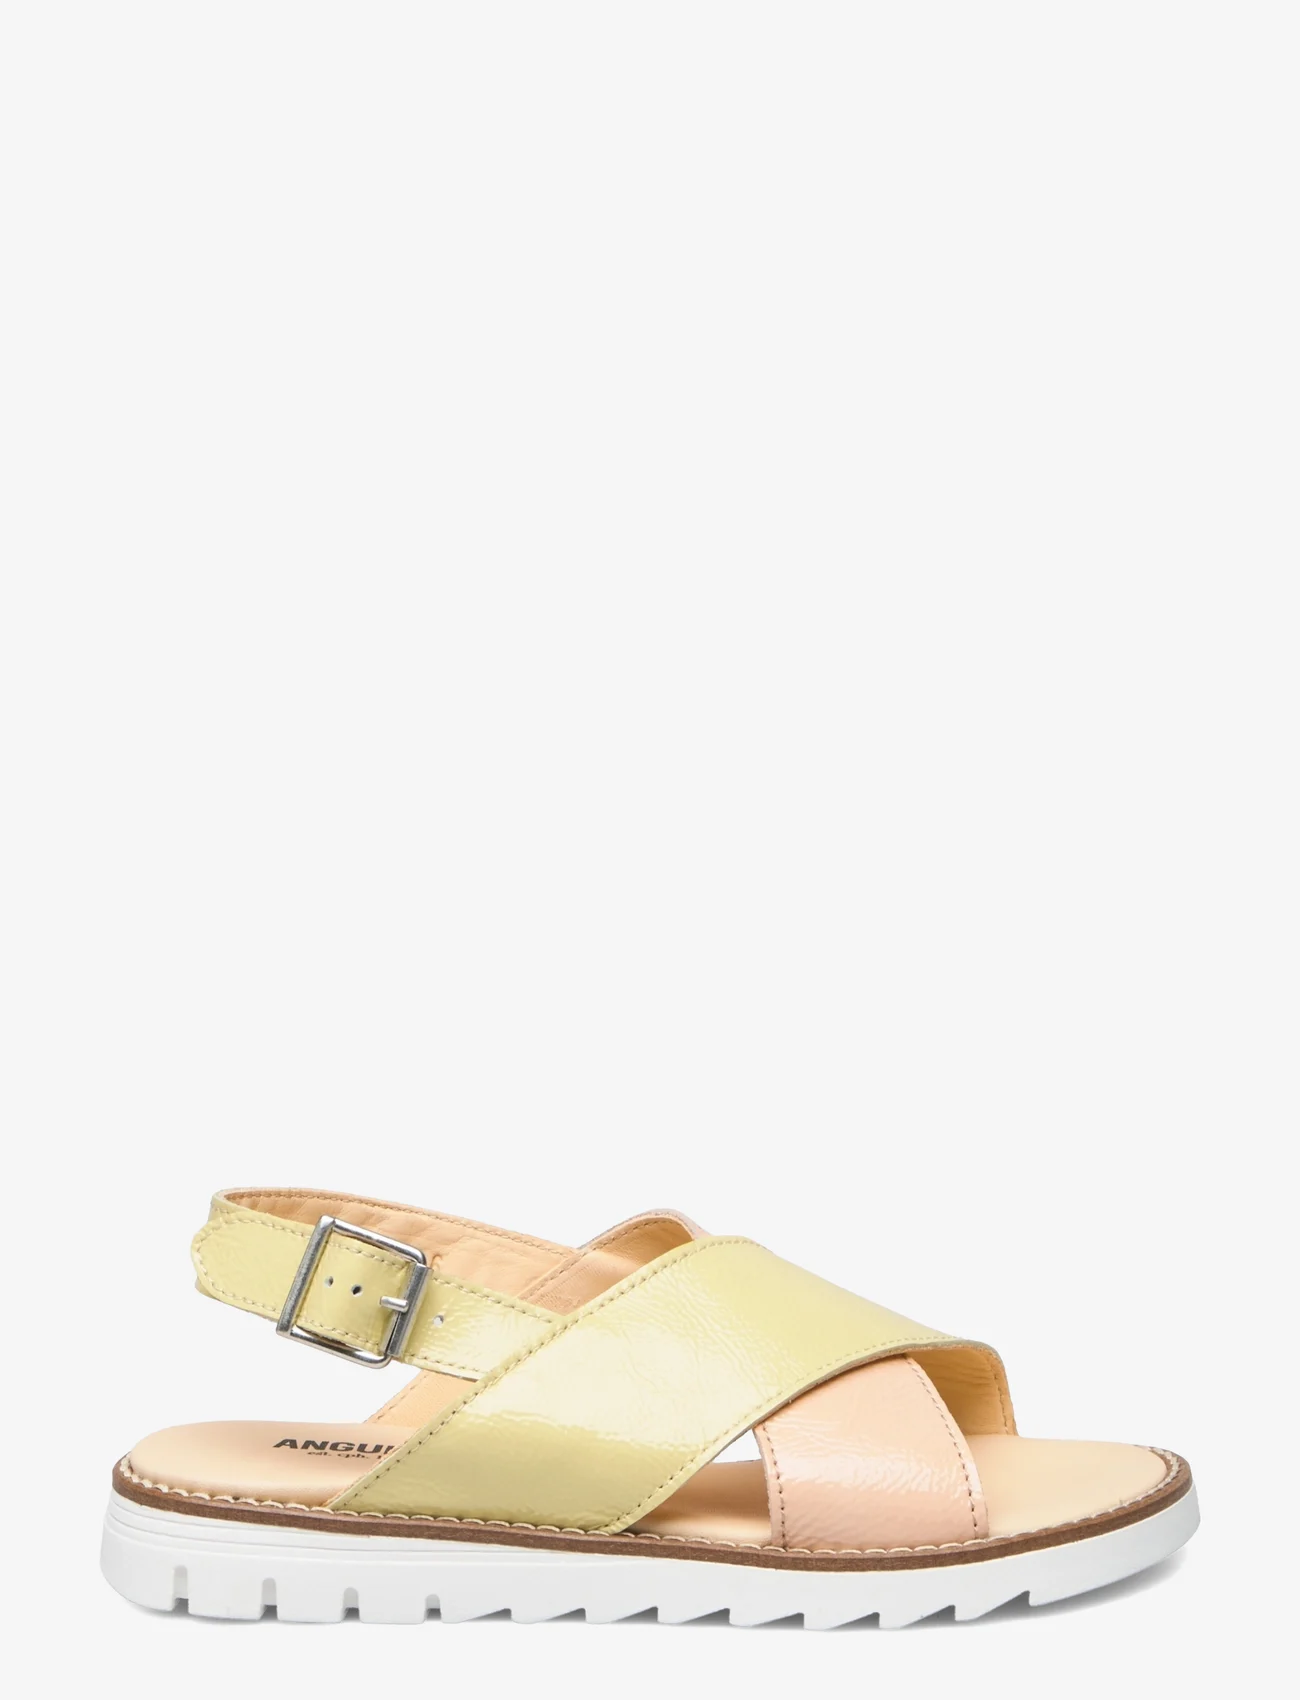 ANGULUS - Sandals - flat - open toe - op - 1304/1320 peach/l.yellow - 1